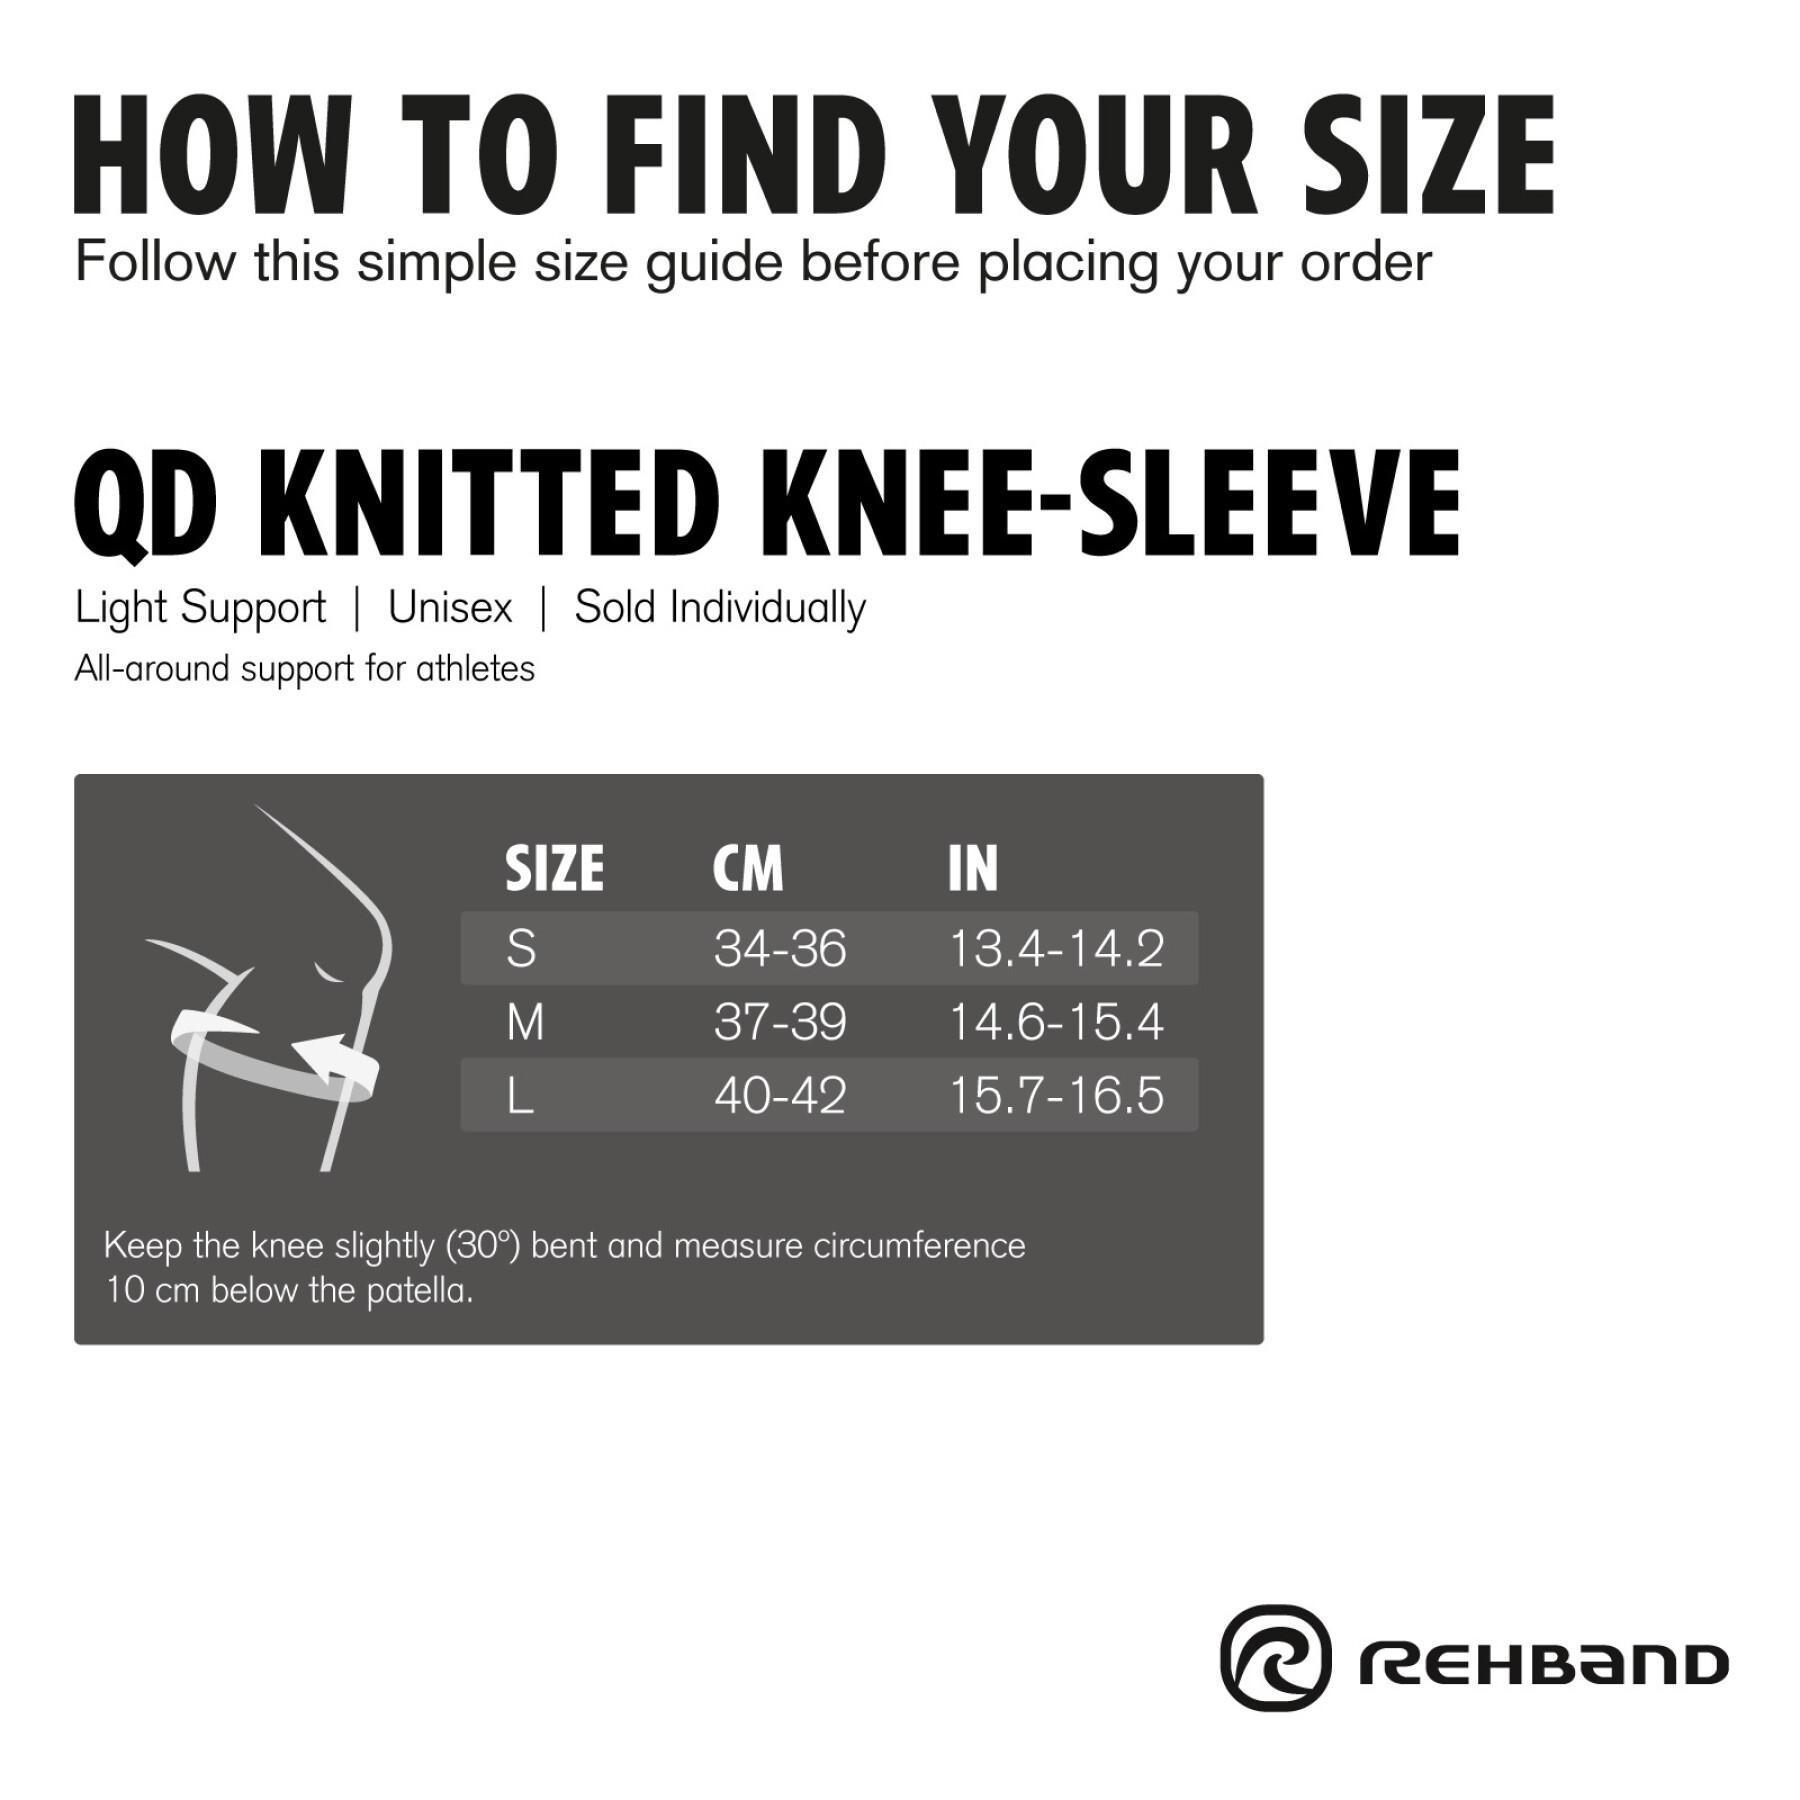 Women's knitted kneepad Rehband Qd line